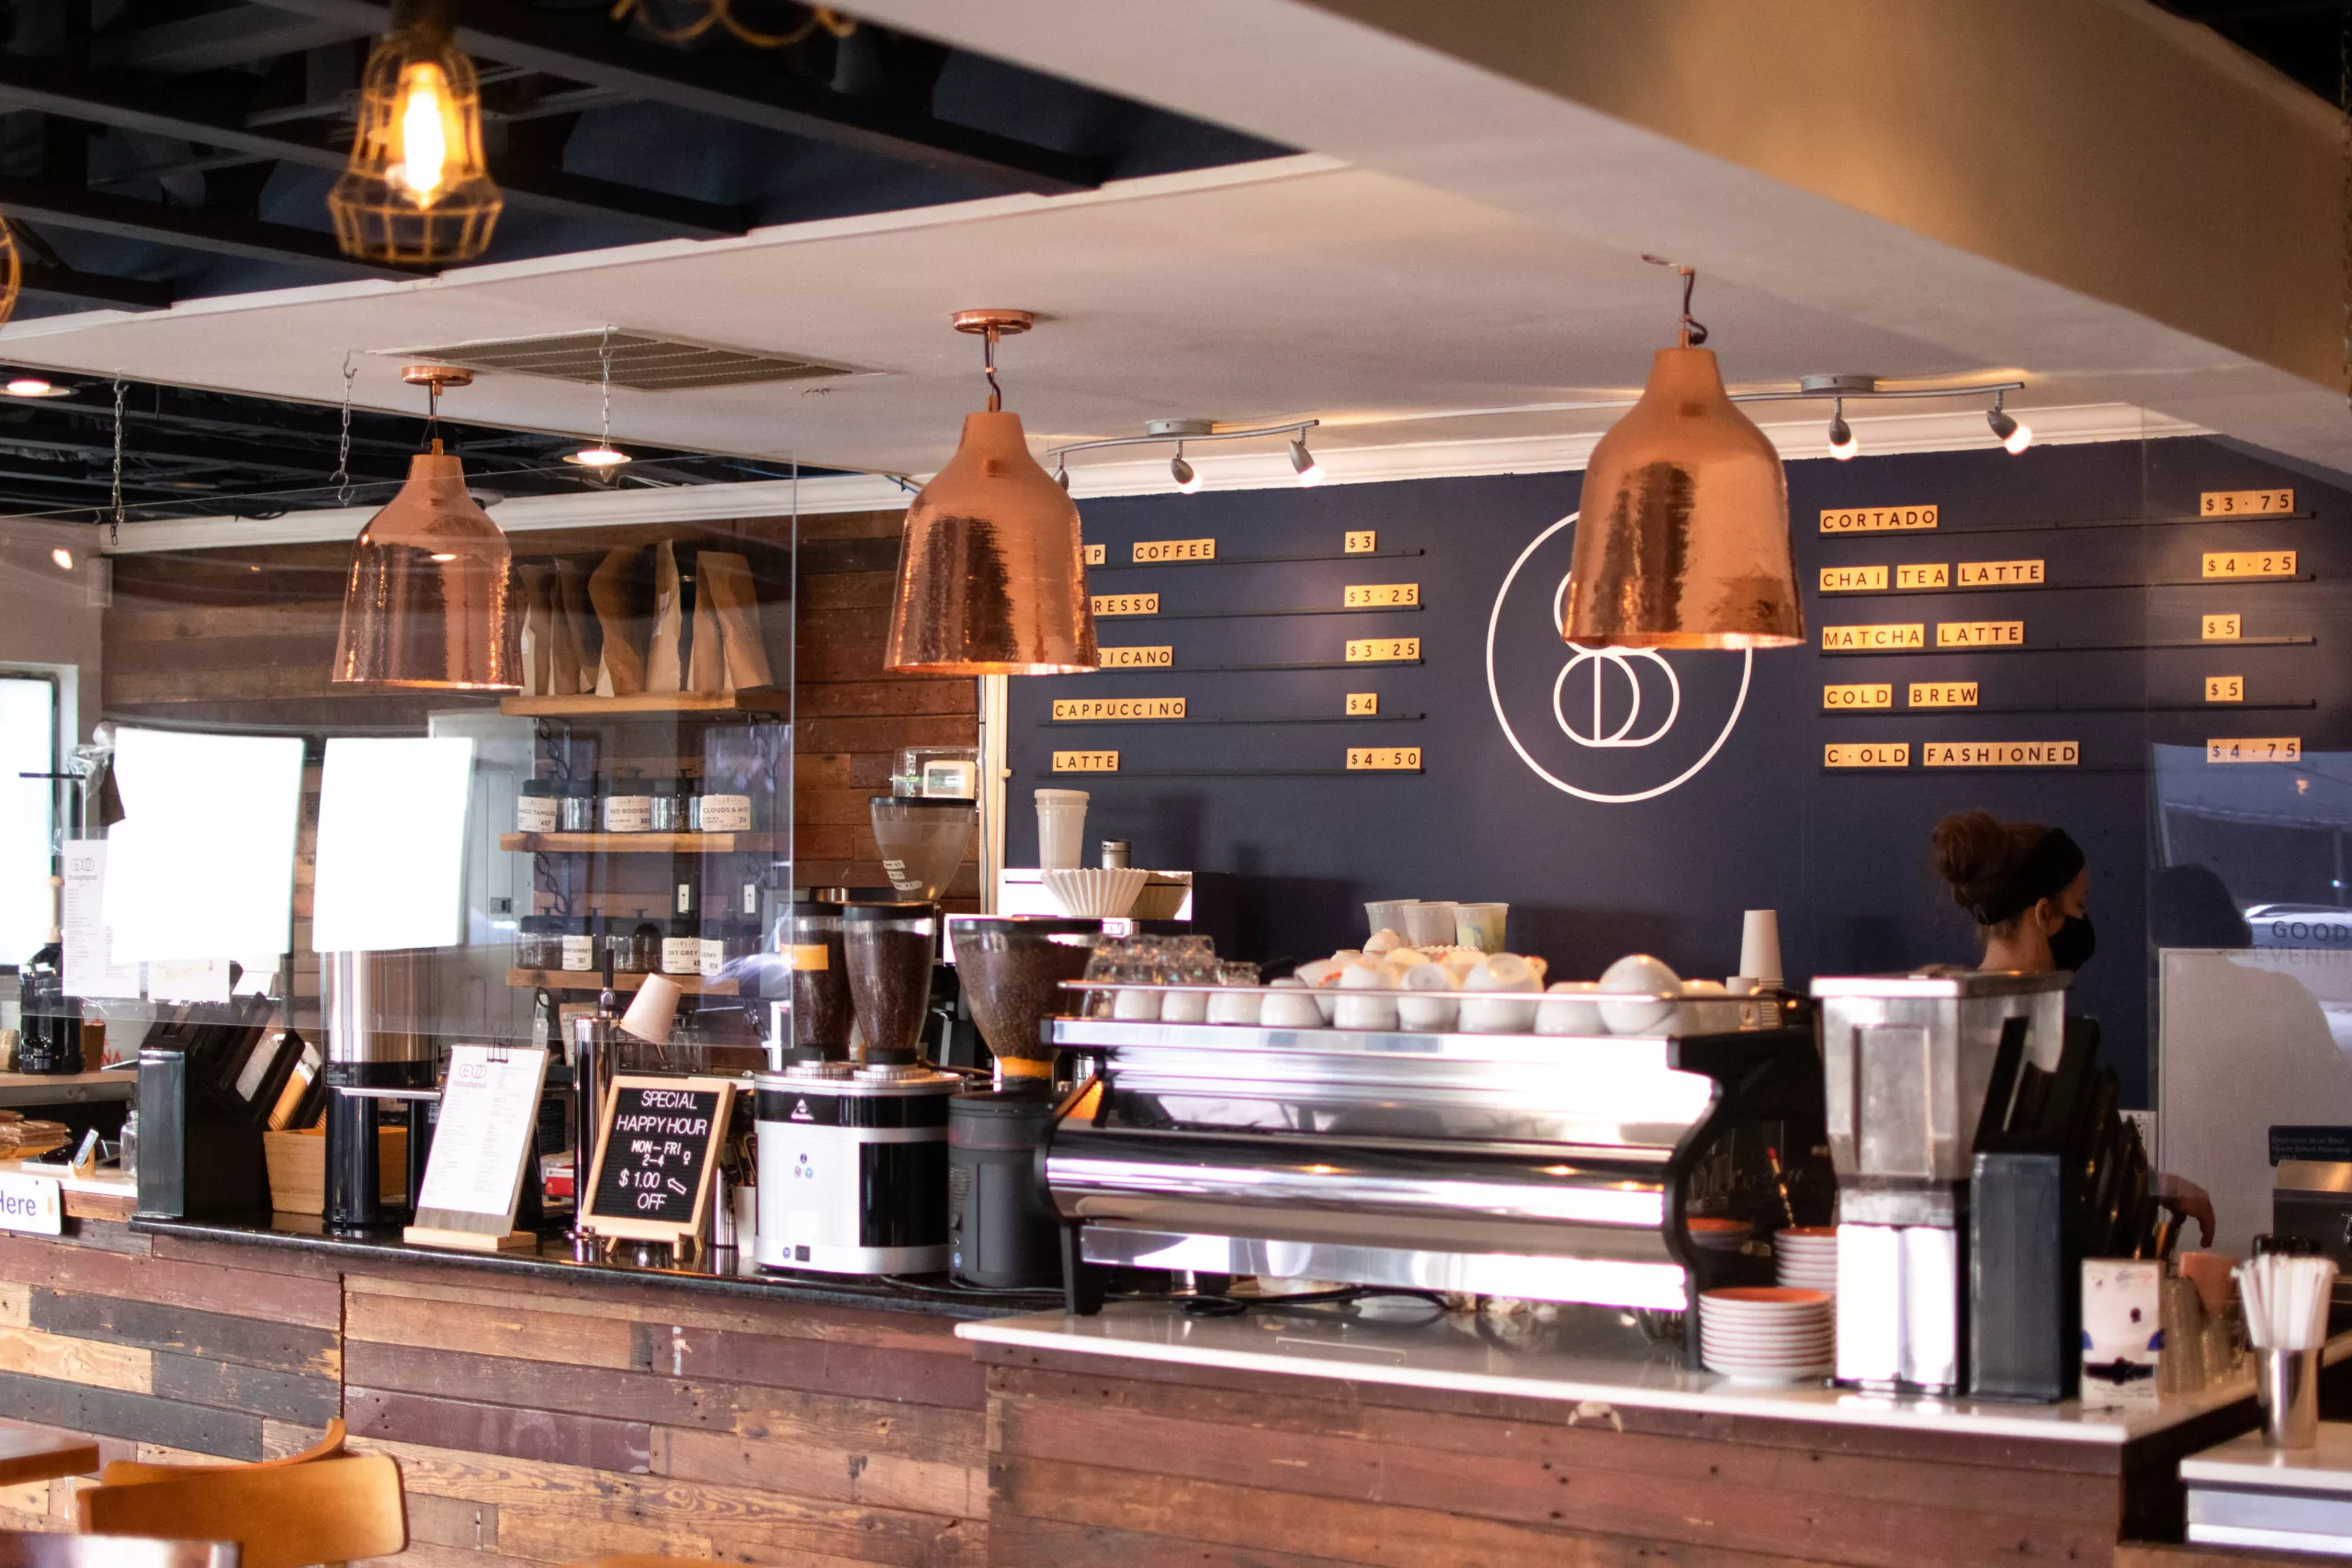 coffee shop business plan marketing strategy